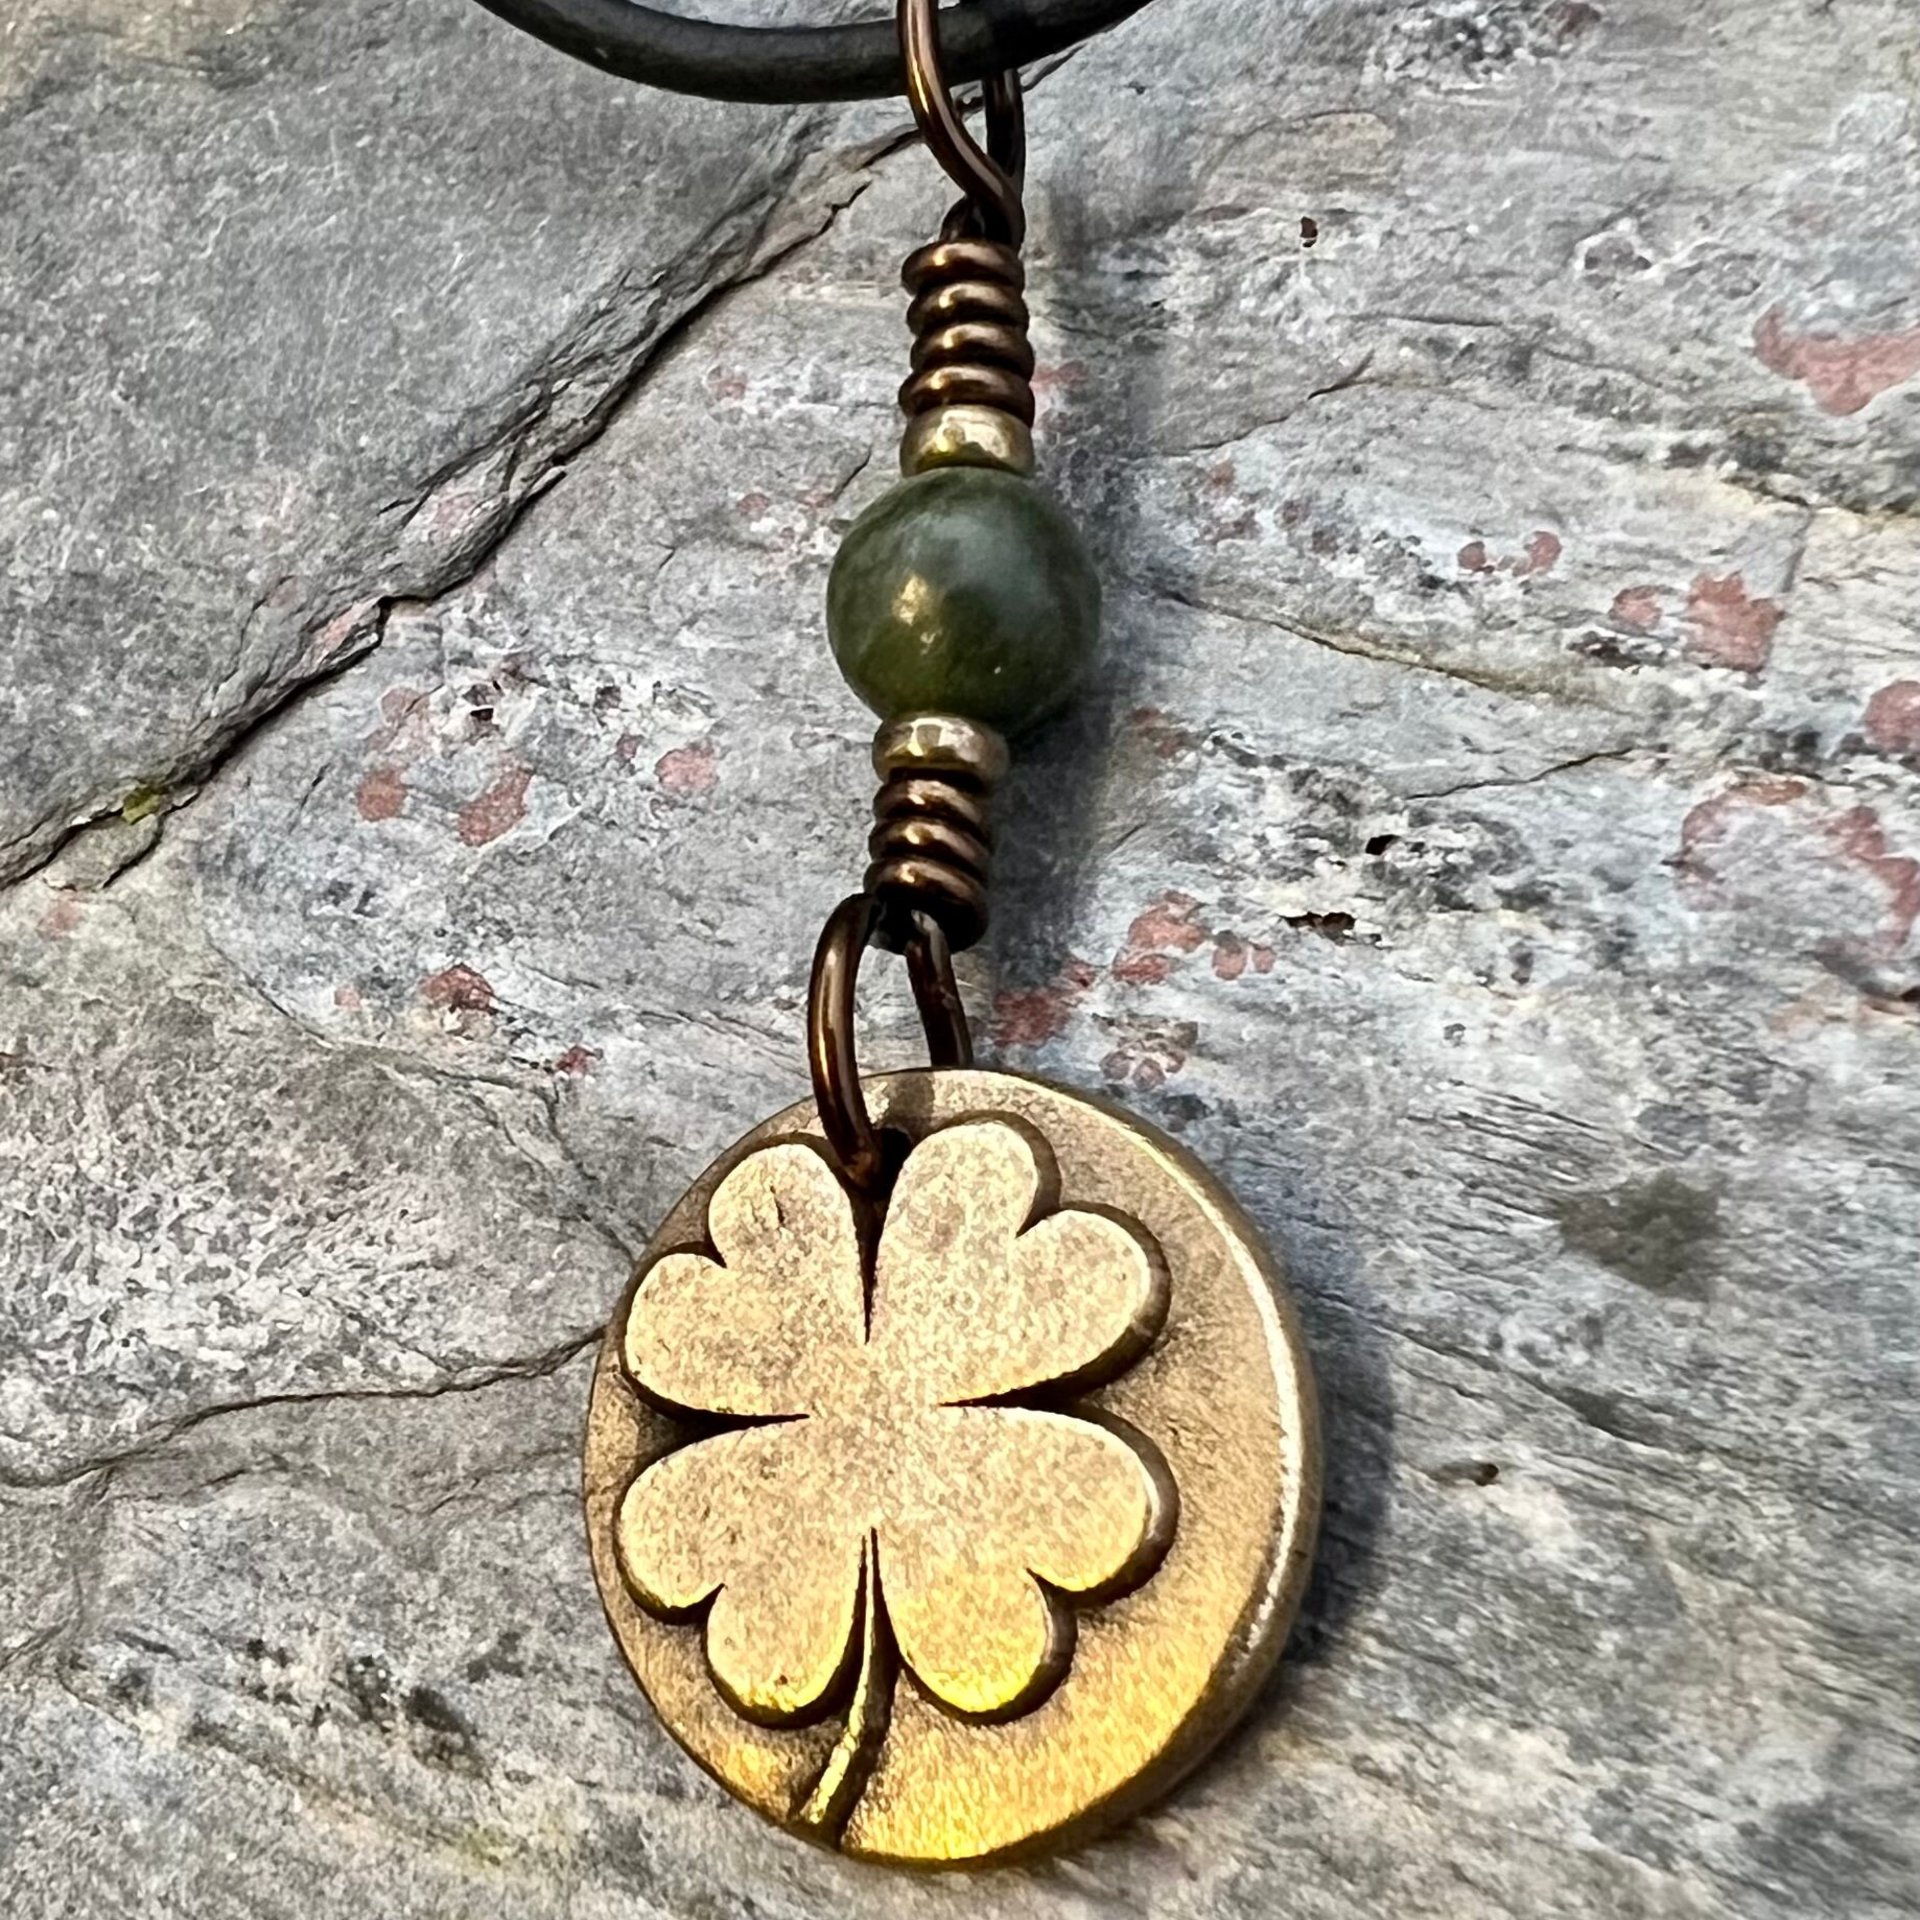 Four Leaf Clover, Bronze Necklace, Wax Seal Charm, Connemara Marble, Irish Celtic Jewelry, Lucky Charm, Celtic Witch, Irish Shamrock Luck